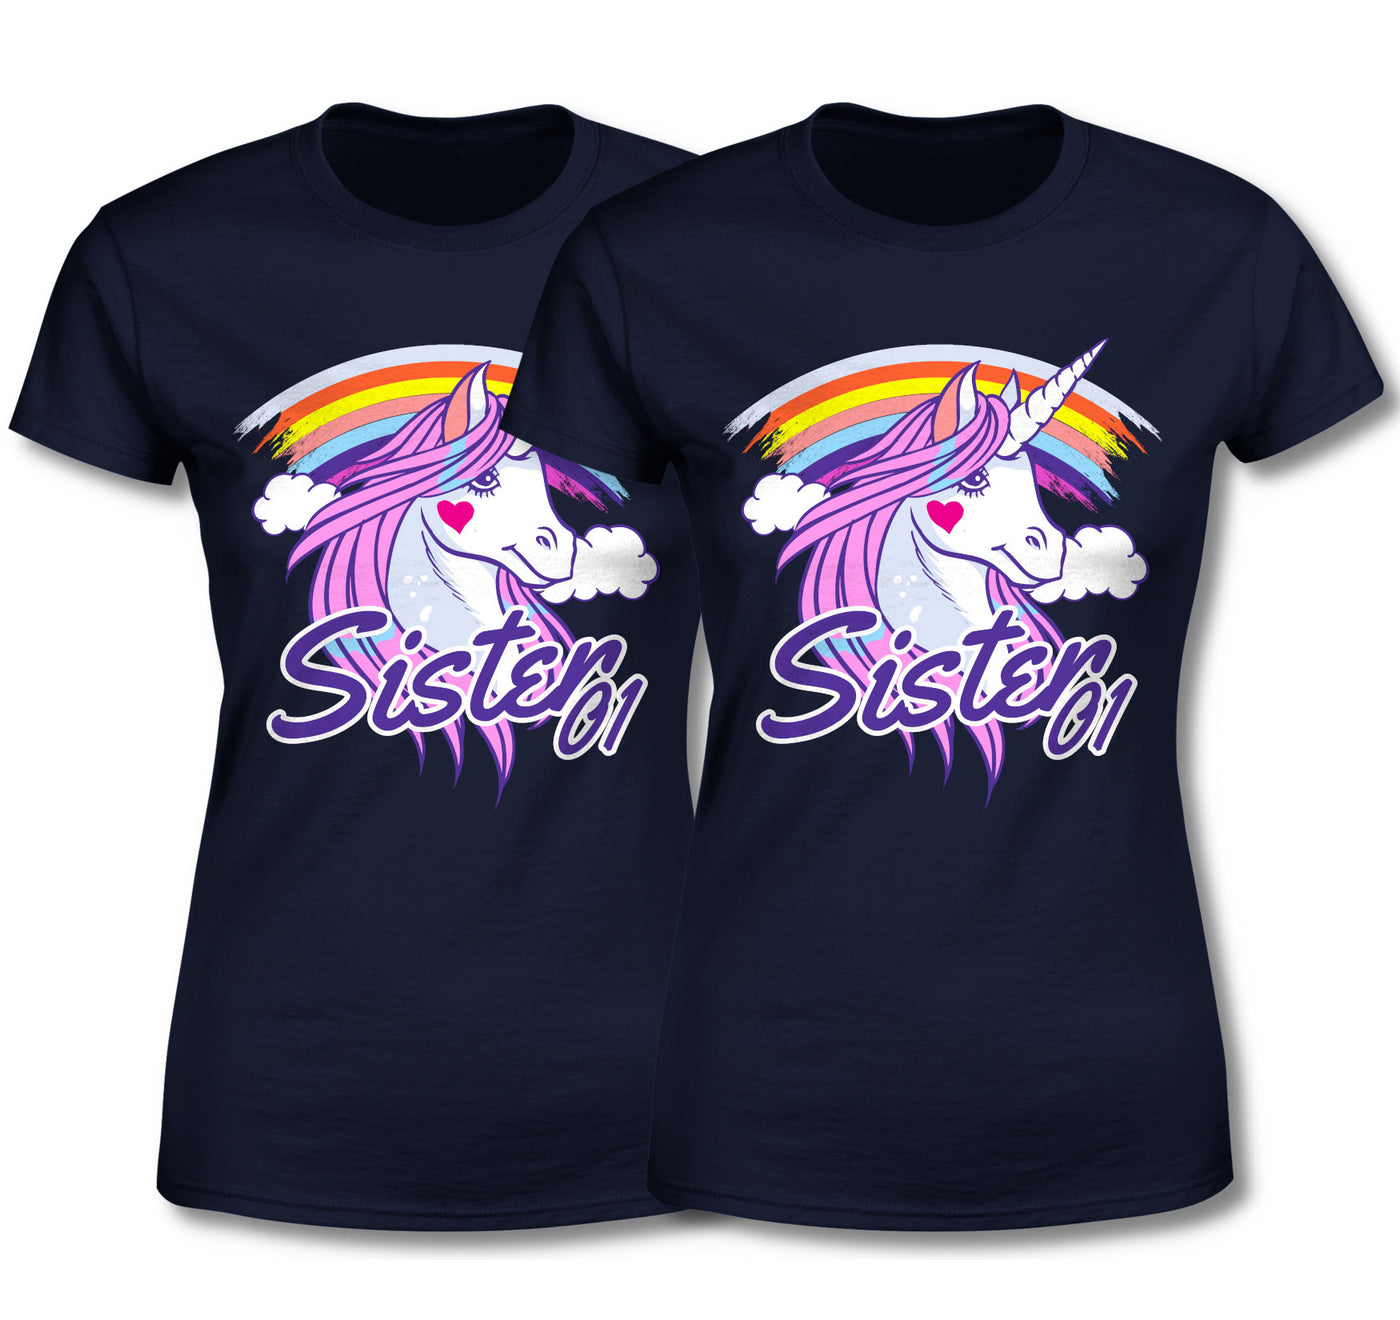 sister-01-unicorn-navy-dd115wts